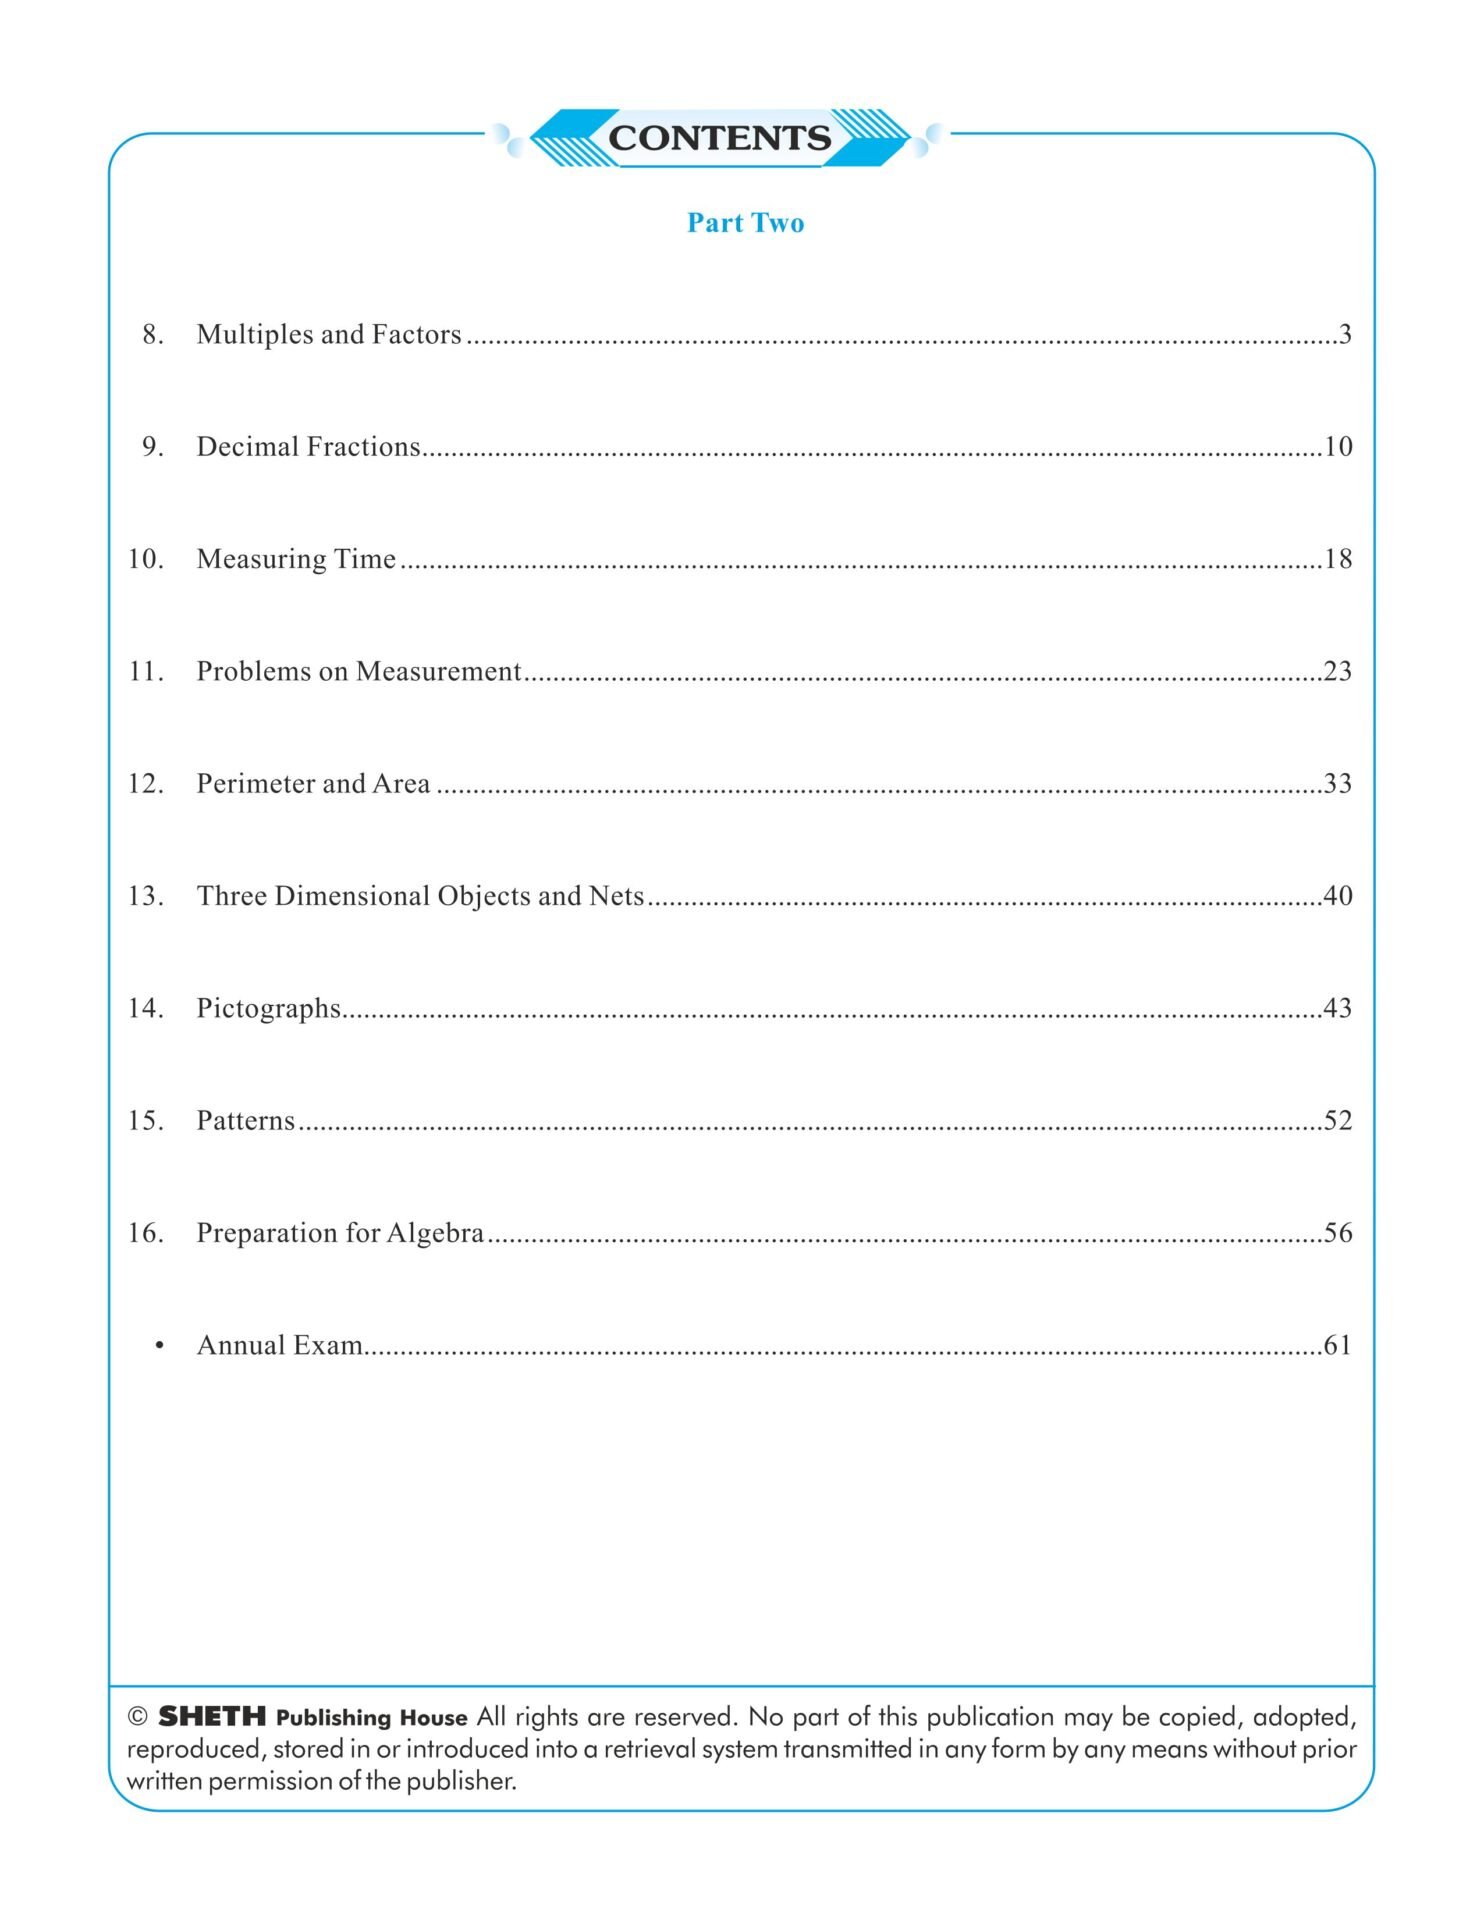 CCE Pattern Nigam Scholar Workbooks Mathematics Standard 5 Term 2 Part 2 2